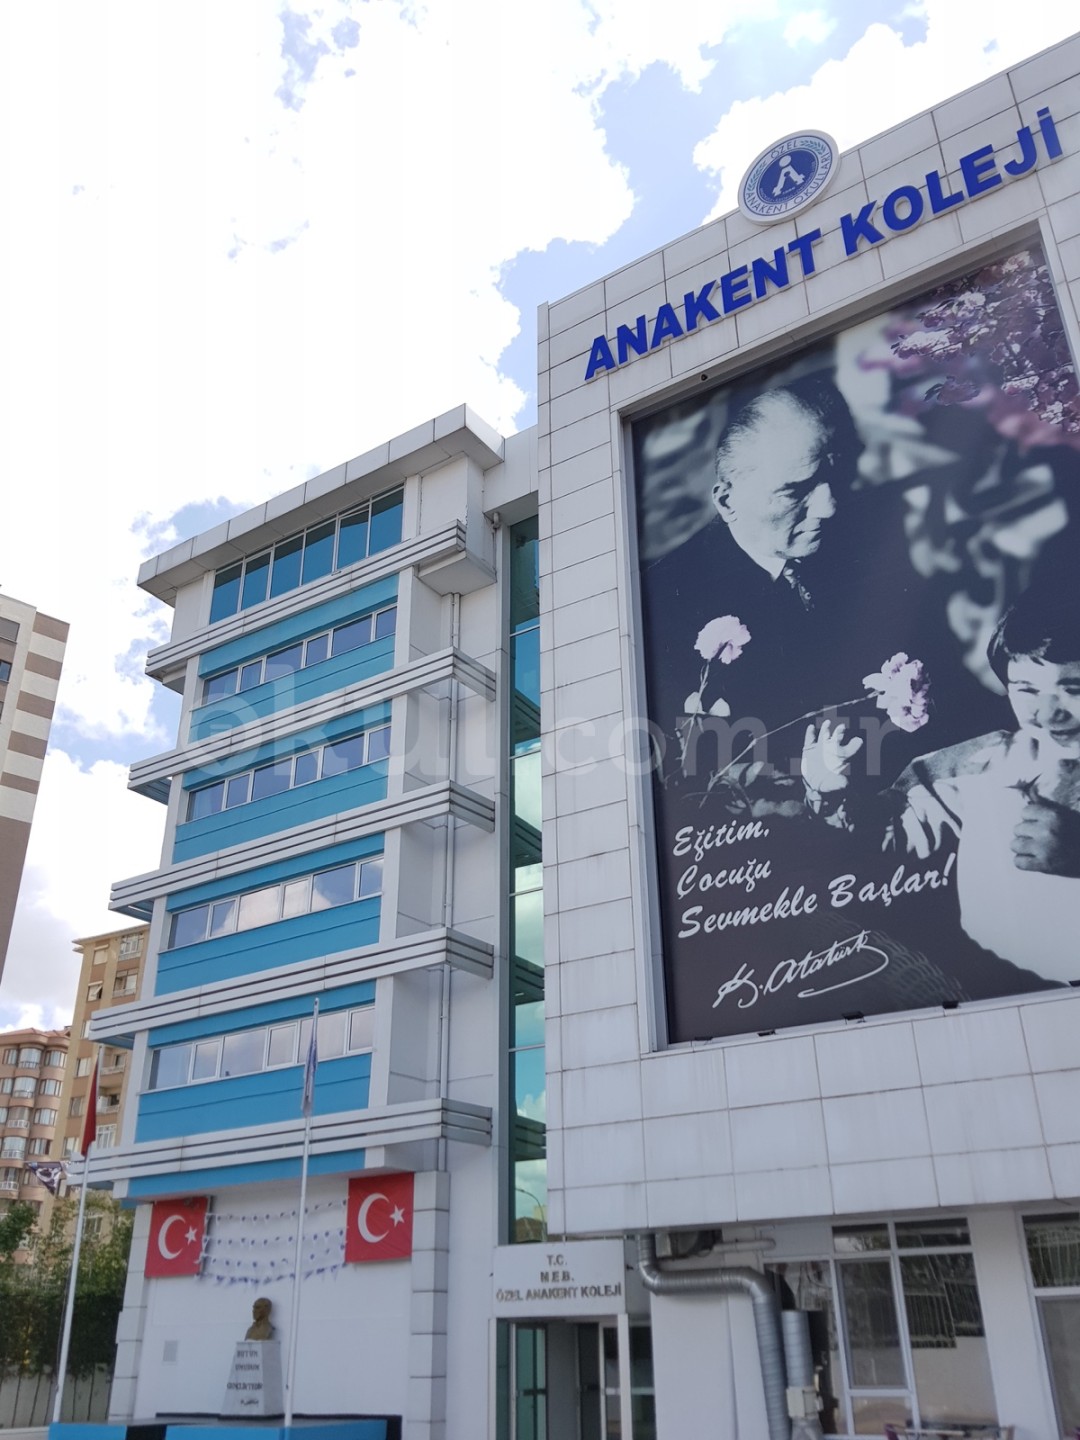 Özel Kadıköy Anakent Koleji Anadolu Lisesi